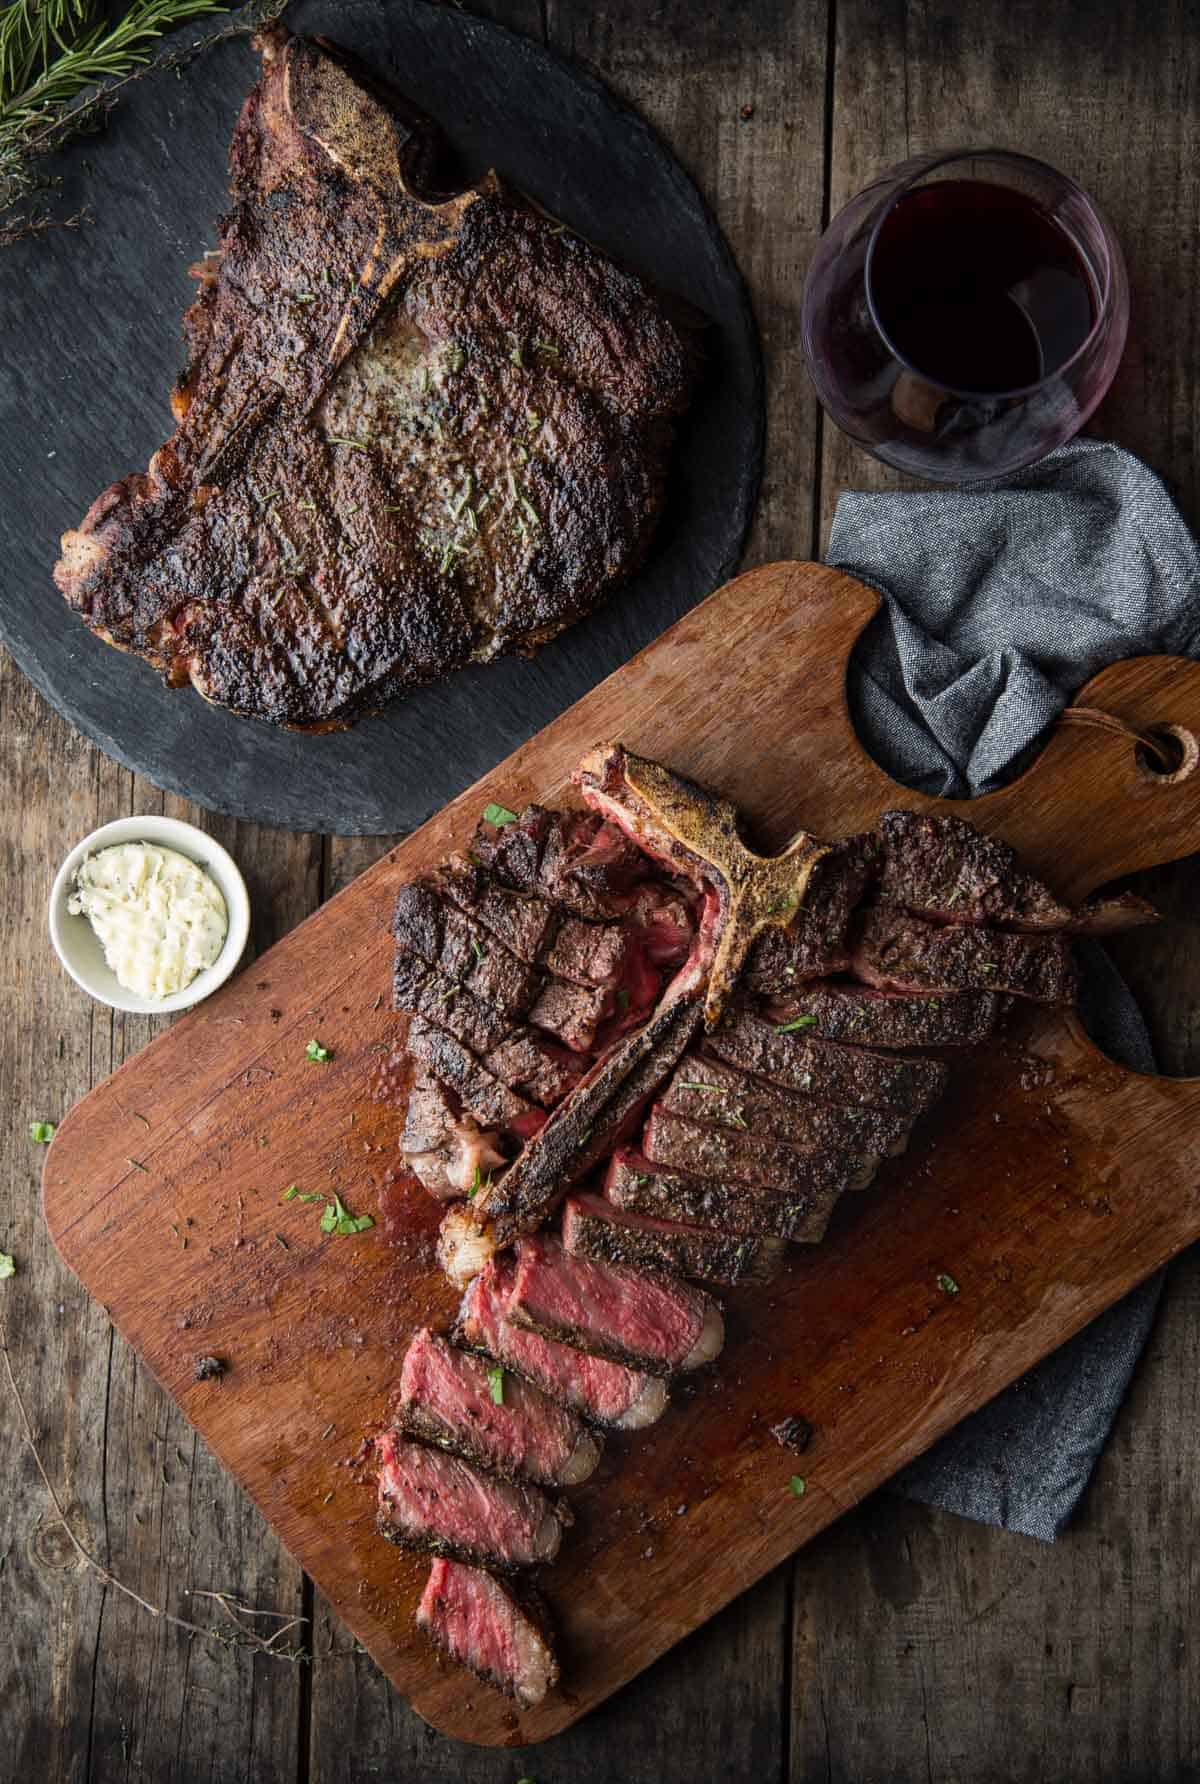 https://www.vindulge.com/wp-content/uploads/2020/03/Grilled-T-Bone-Steak.jpg